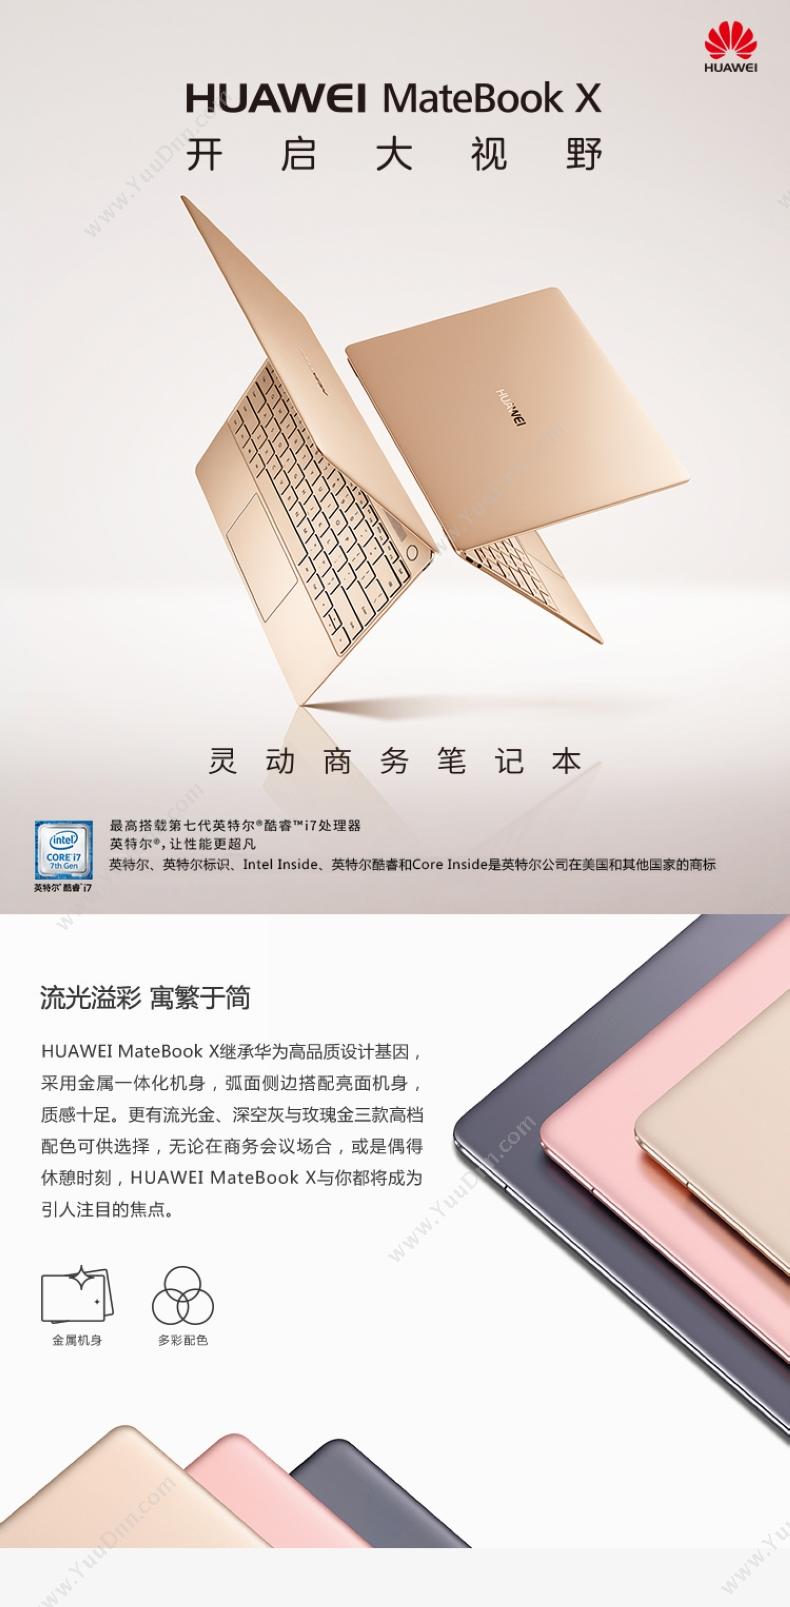 华为 Huawei WT-W19  MateBook X（金）  i7-7500U/集成/8GB/512GB/集显/无光驱/LED/13.3英寸/2年保修/DOS 笔记本